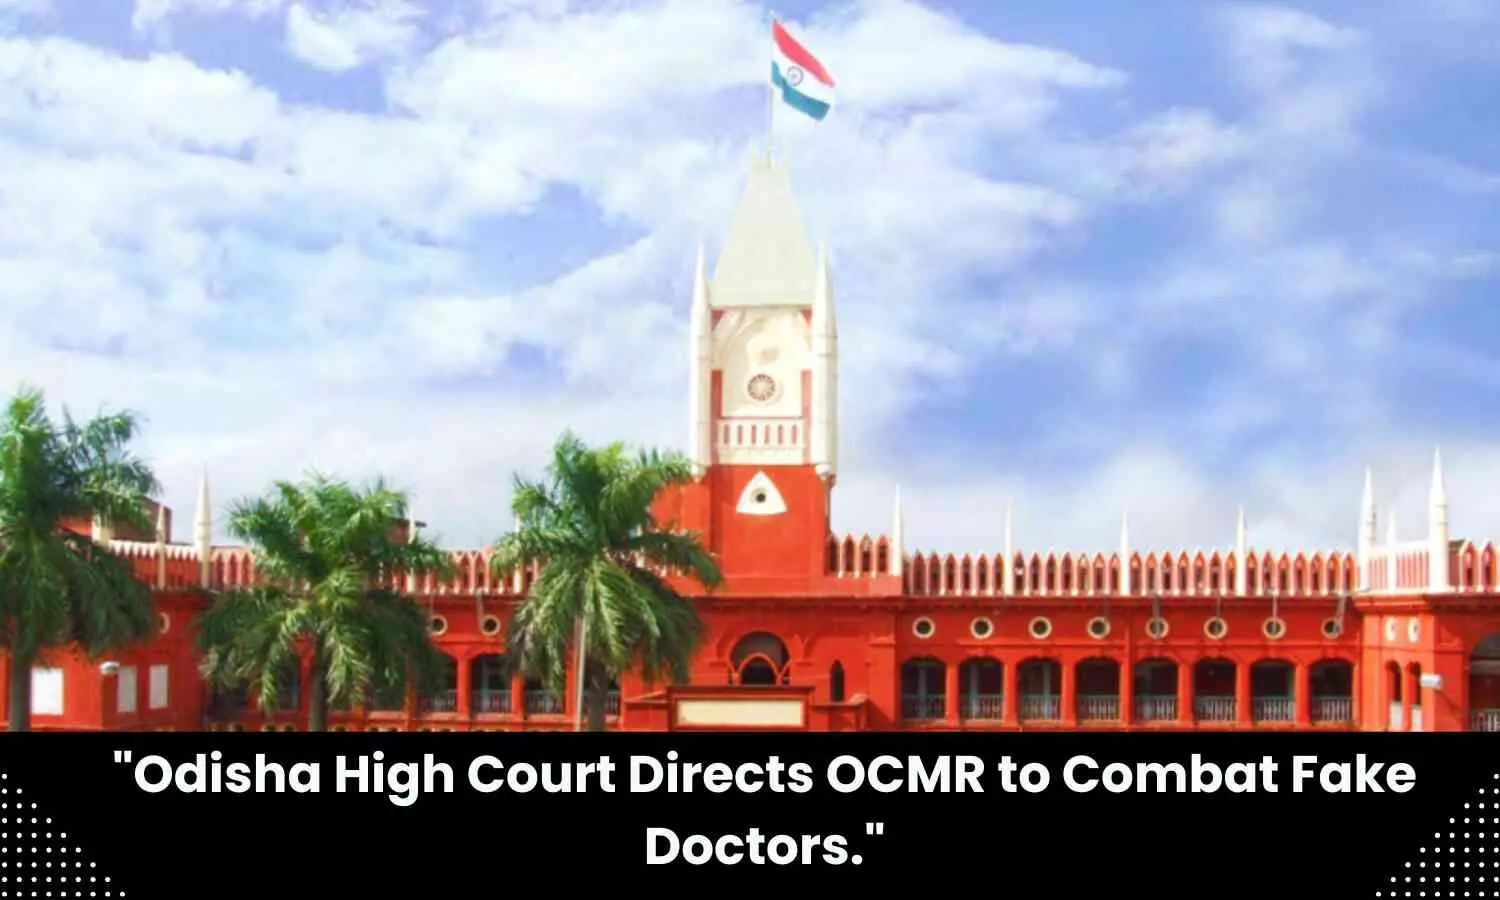 Develop method to identify fraudulent allopathic doctors: Odisha HC asks OCMR